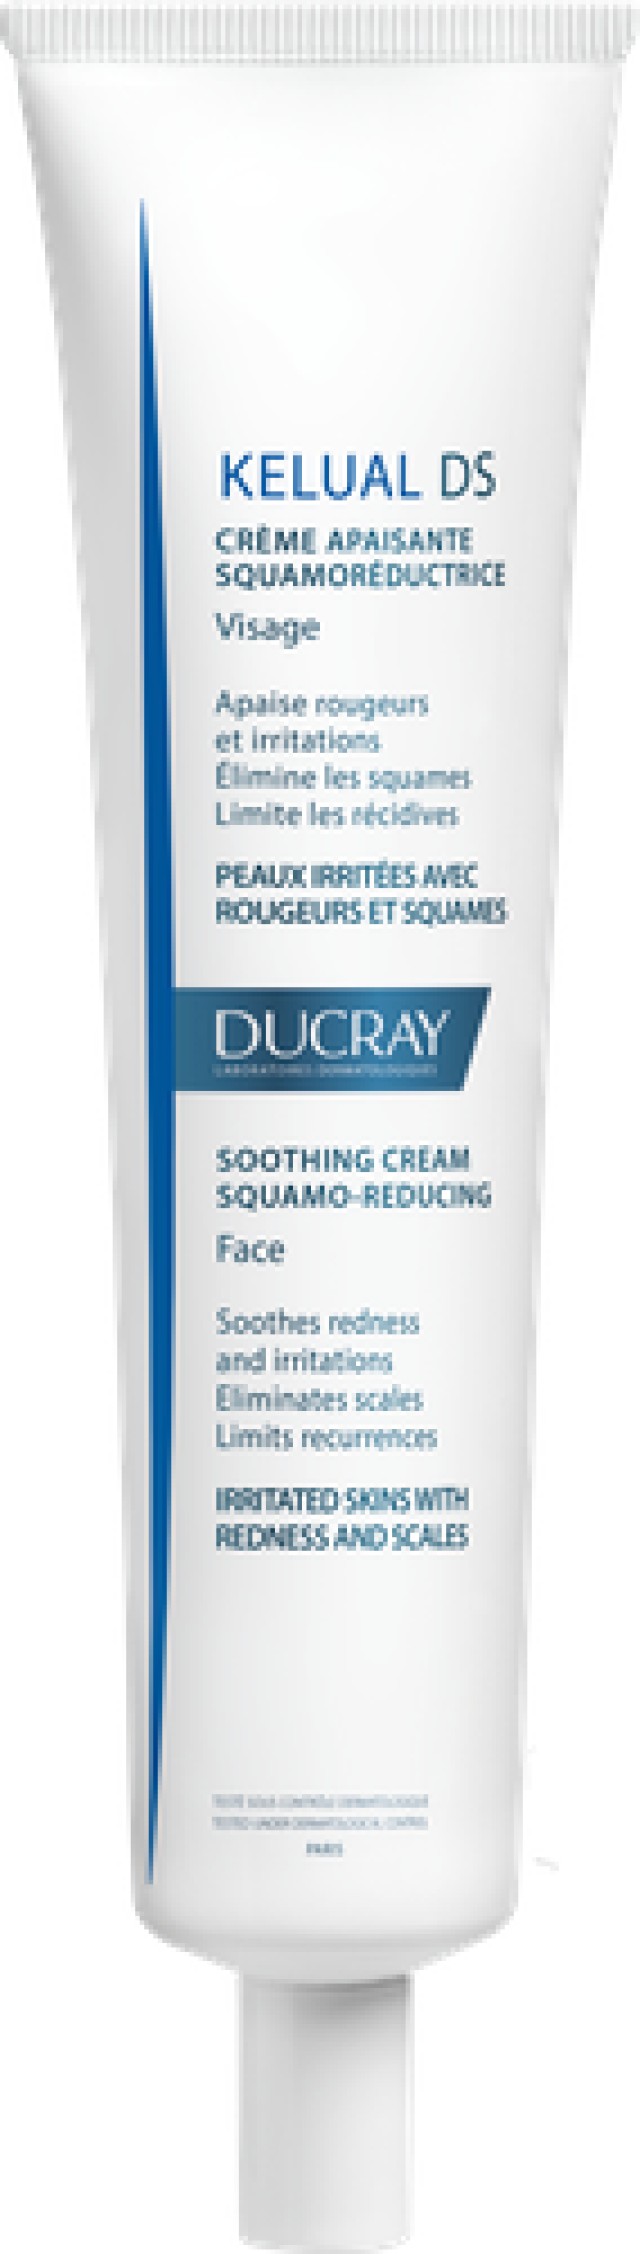 Ducray Kelual DS Cream Κατά της Σμηγματορροικής Δερματίτιδας 40ml